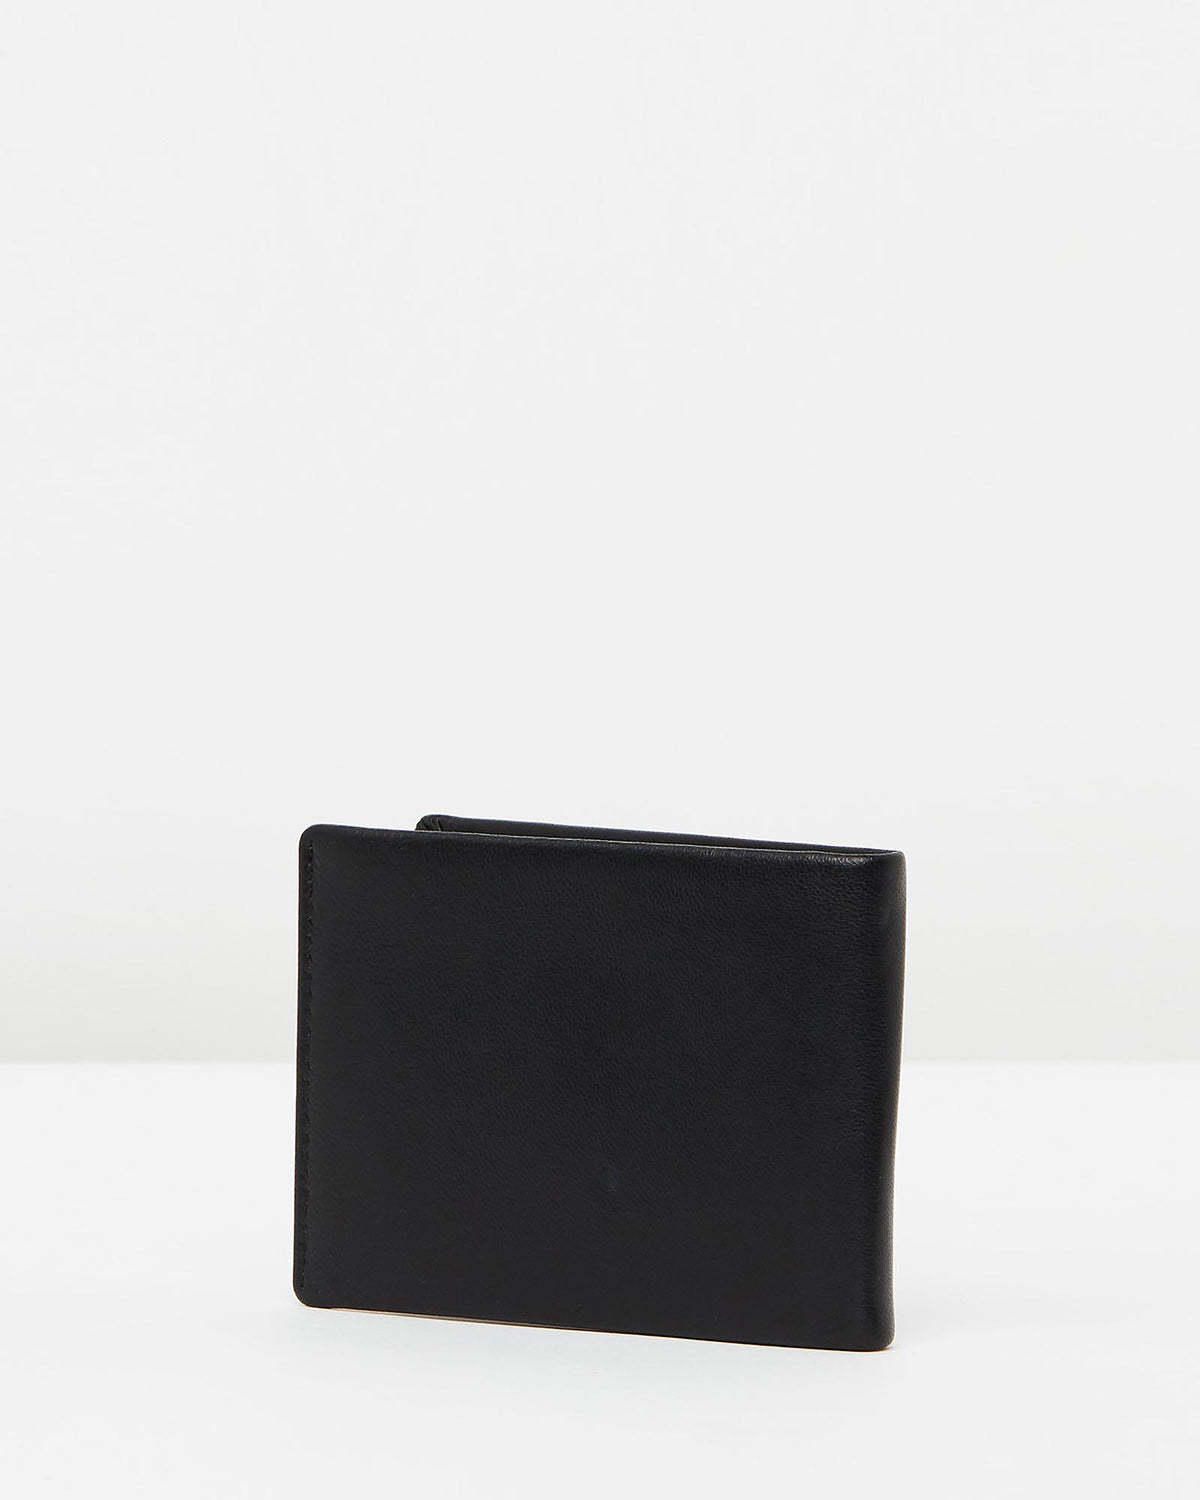 The Statesman Wallet Leather Black